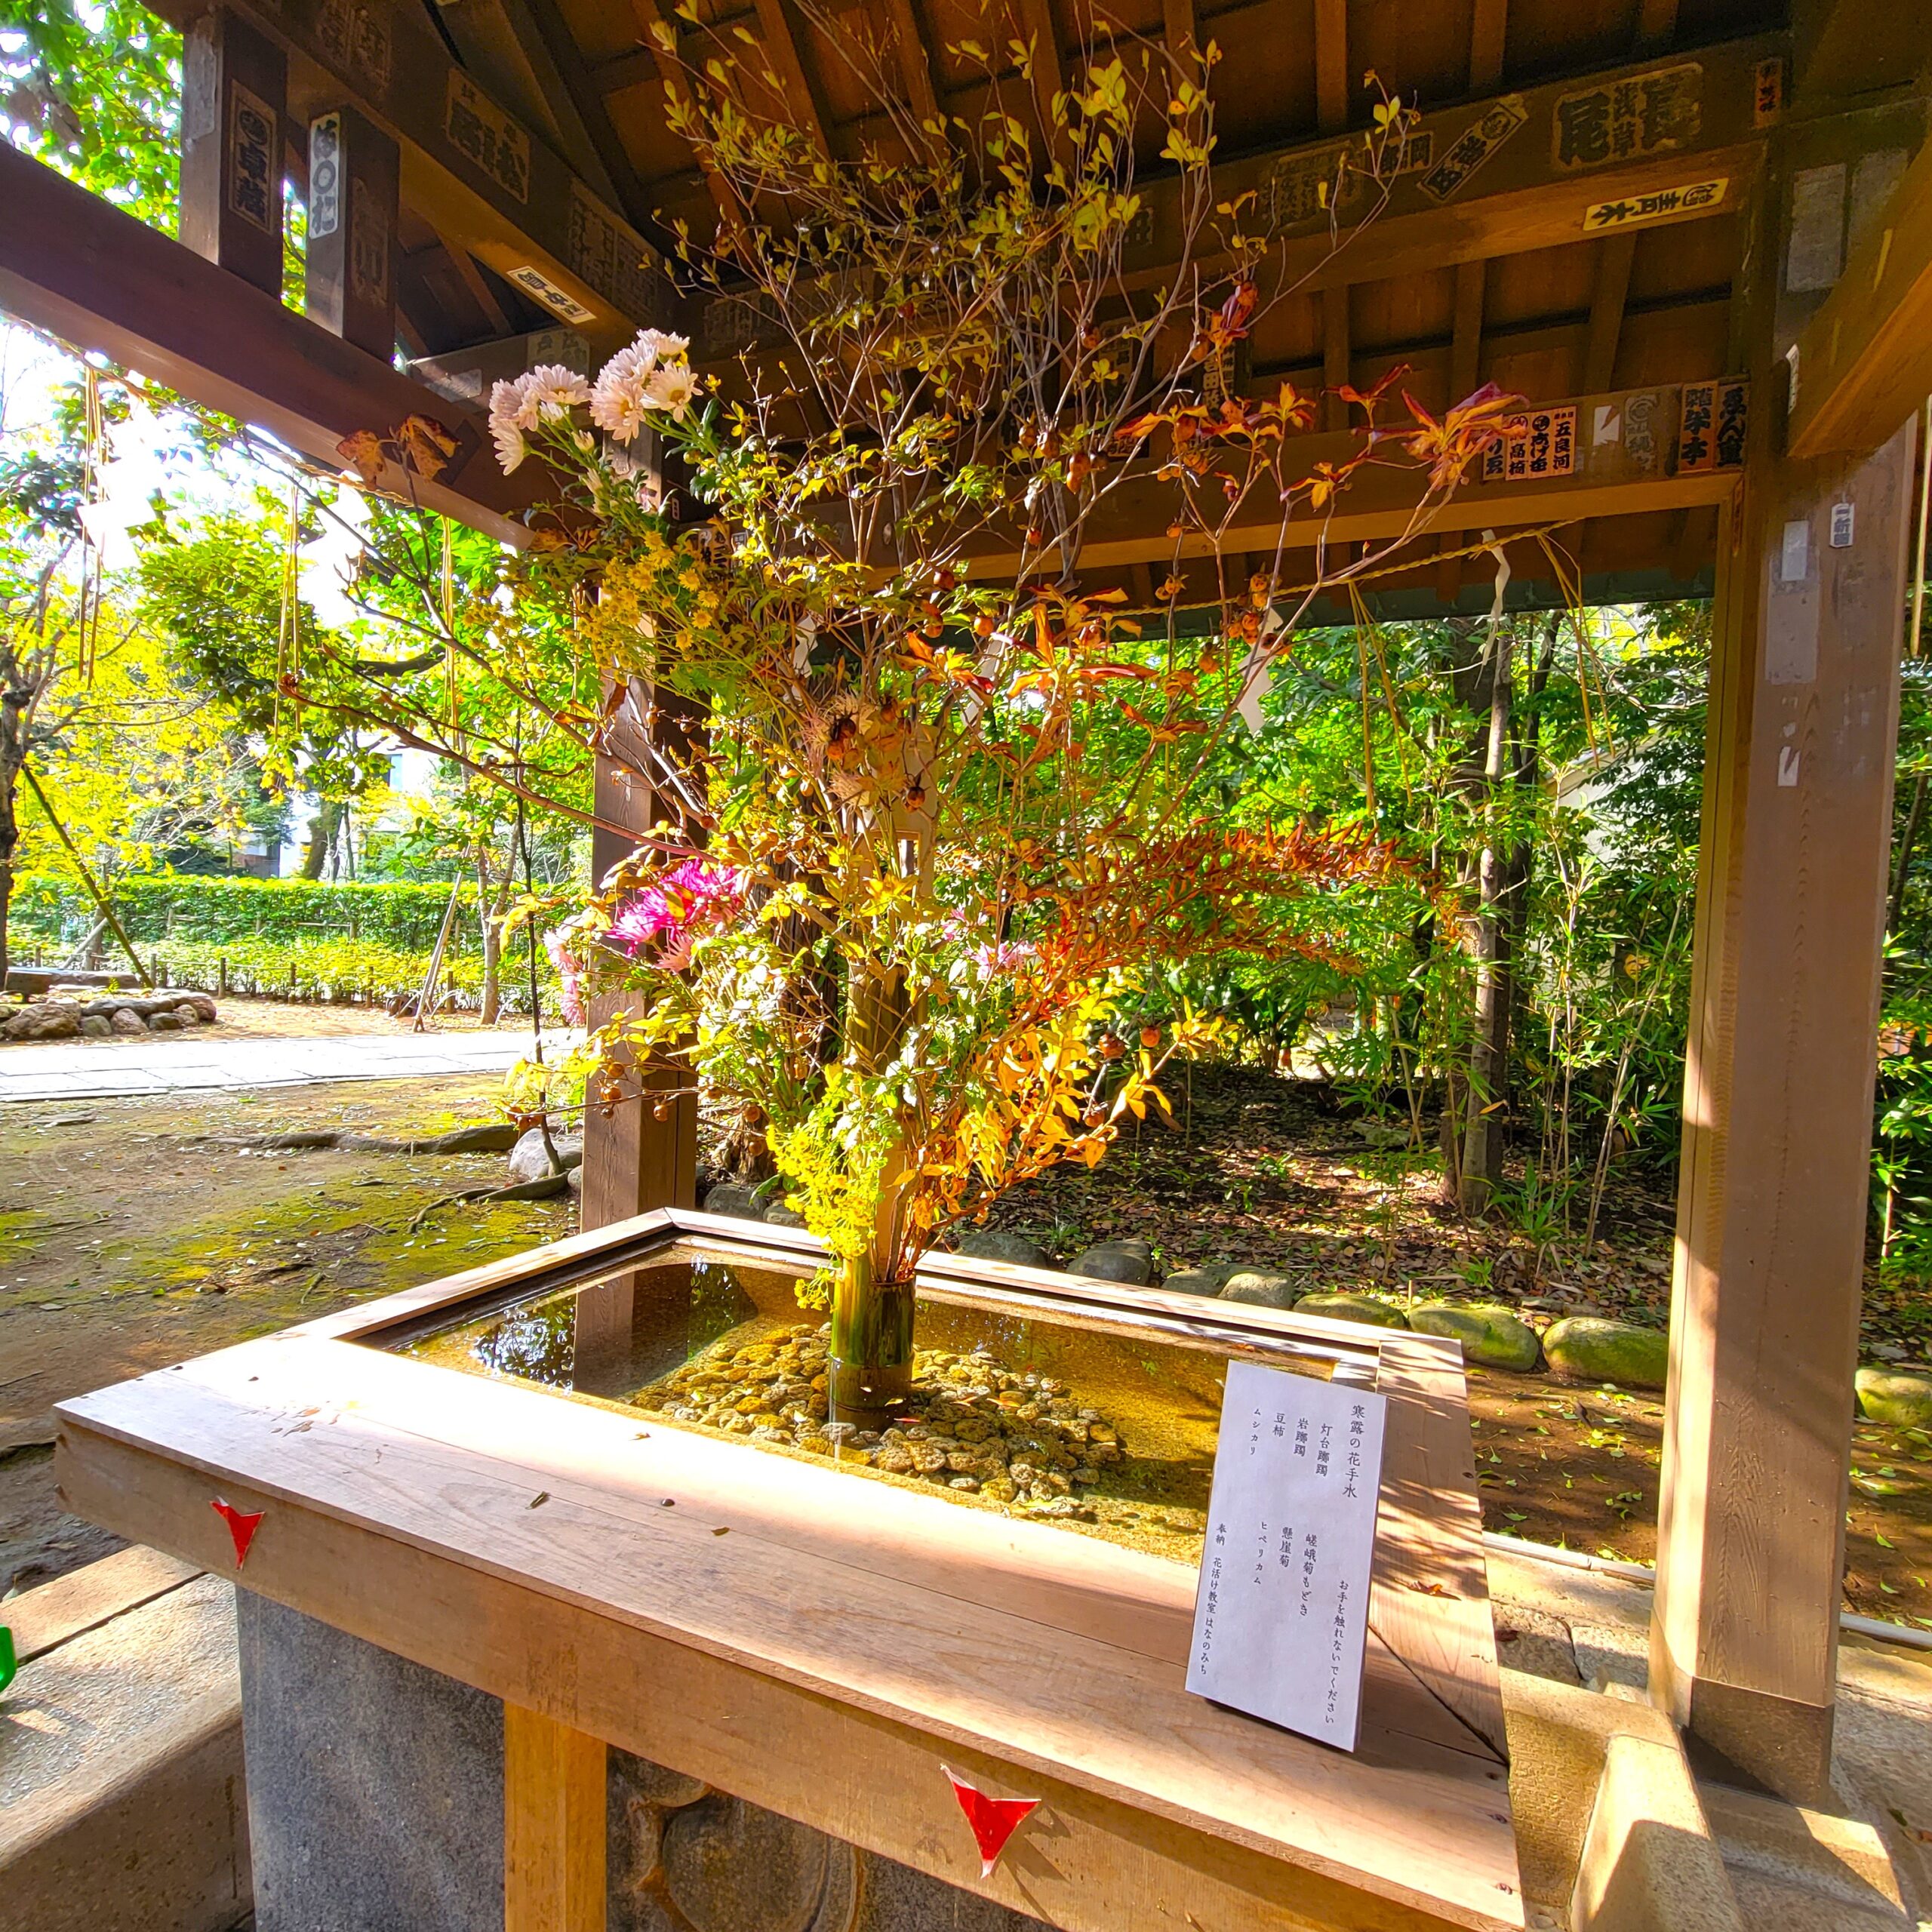 How to Access Ten Shrines in Tokyo